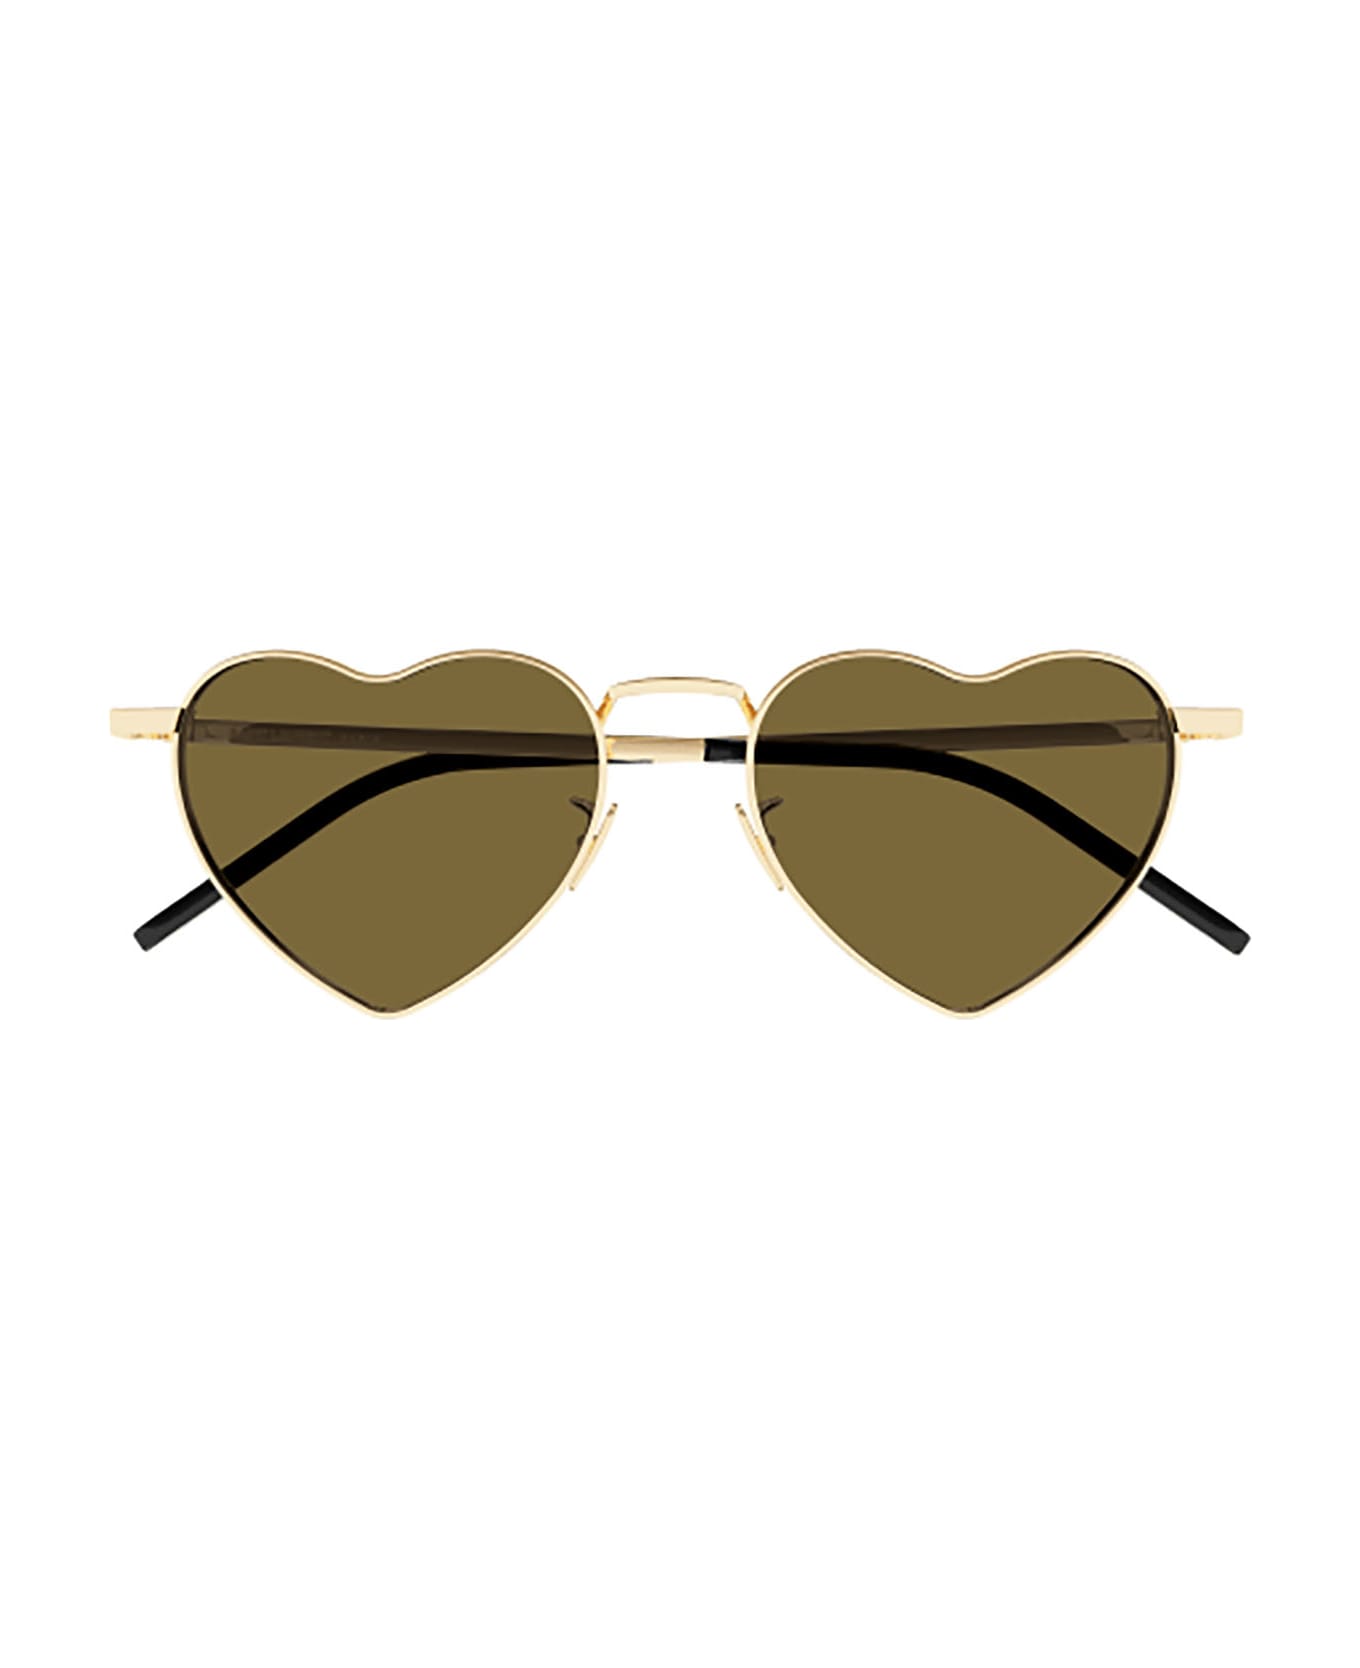 Saint Laurent Eyewear Sl 301 Loulou Sunglasses - 015 gold gold brown サングラス